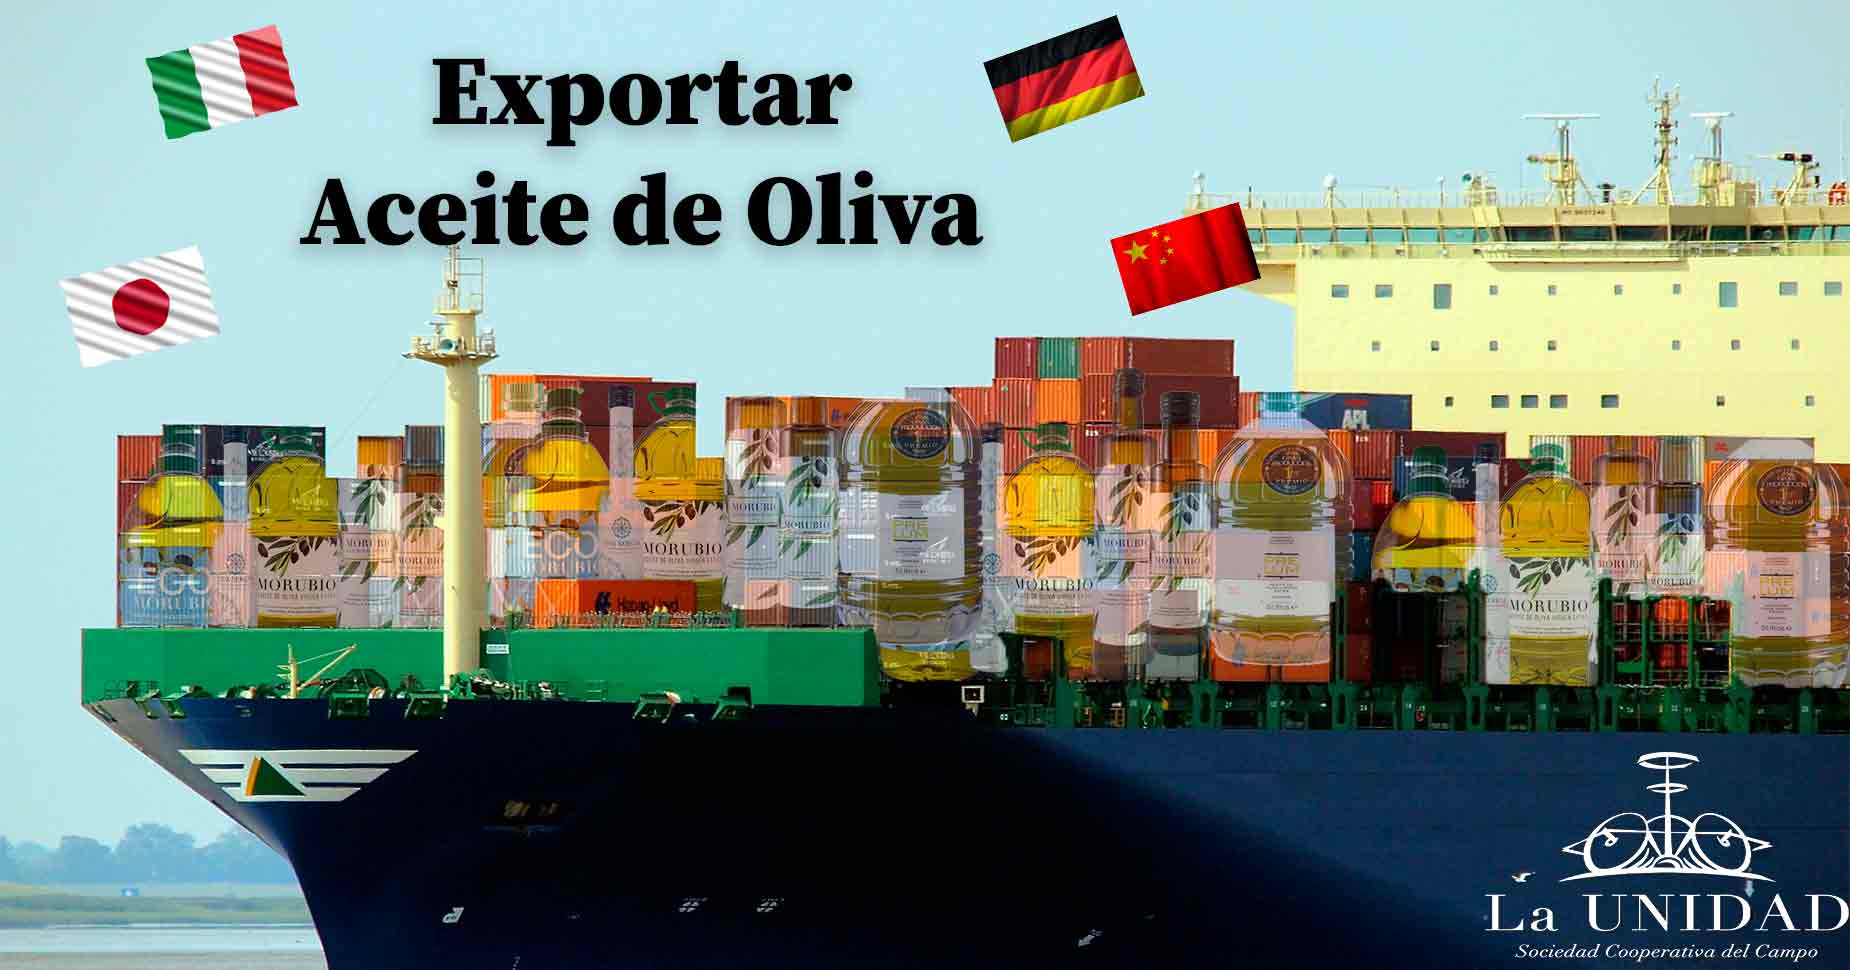 Exportar Aceite de Oliva